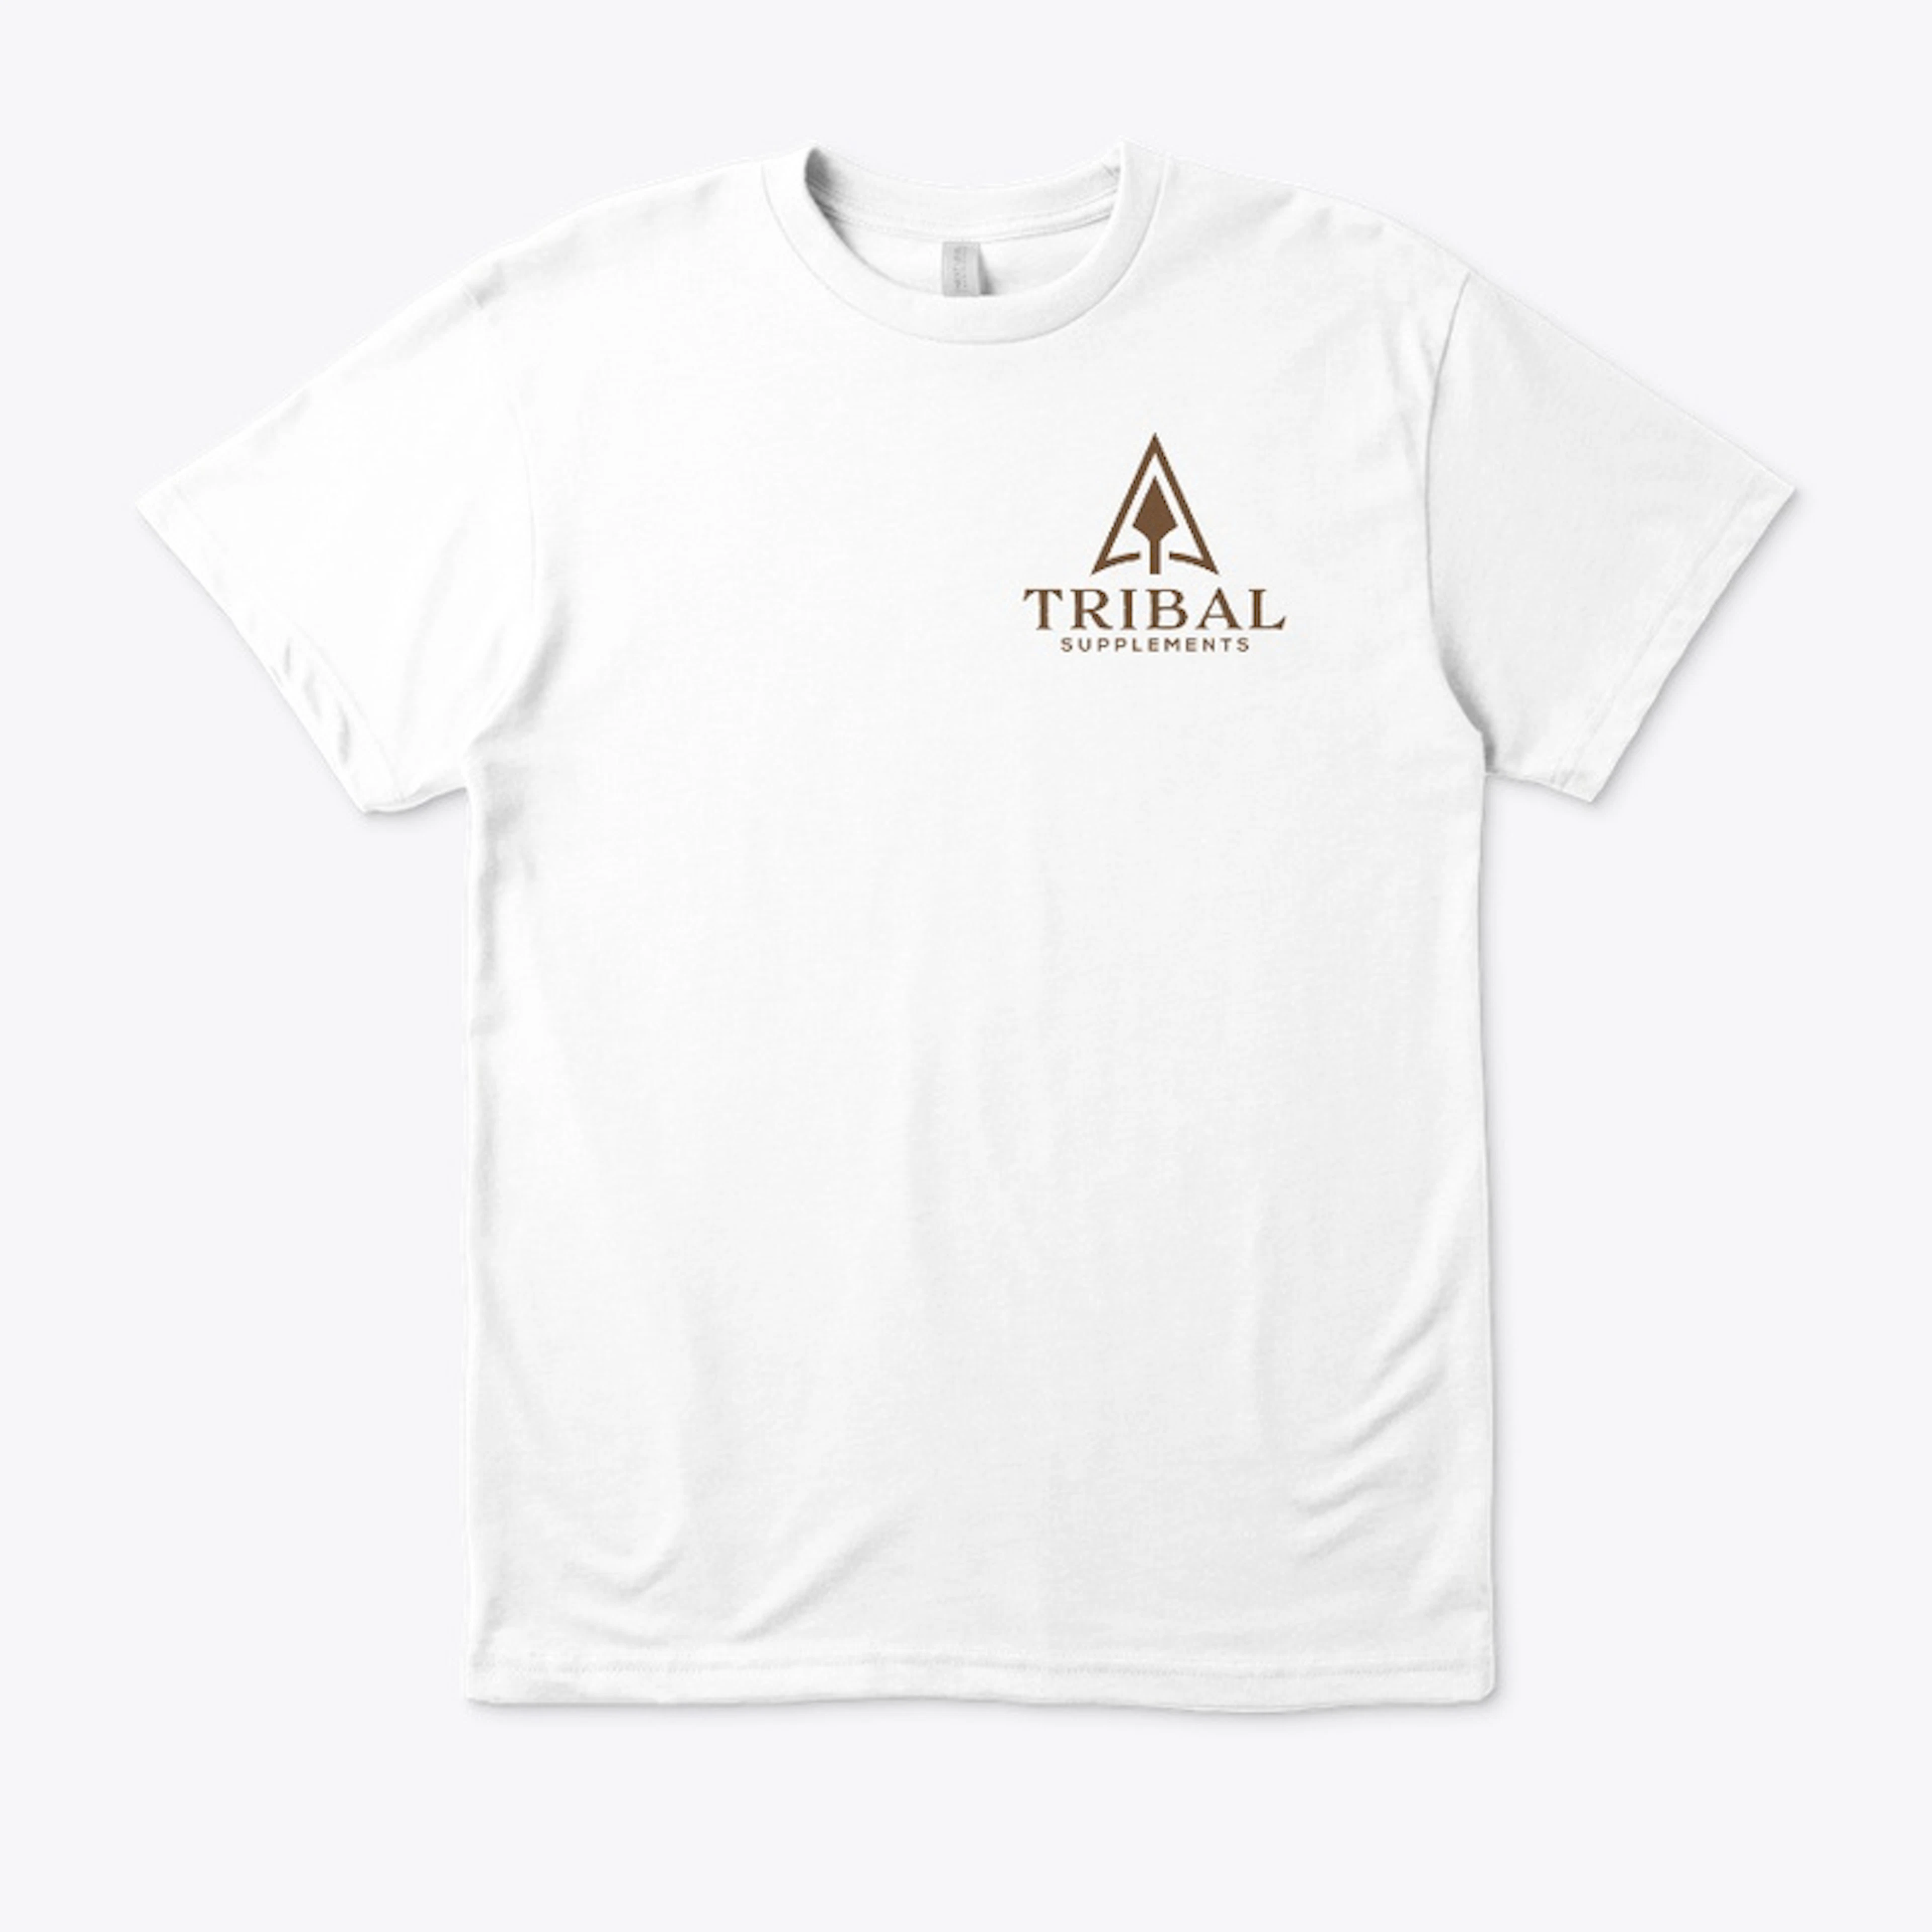 Get Tribal